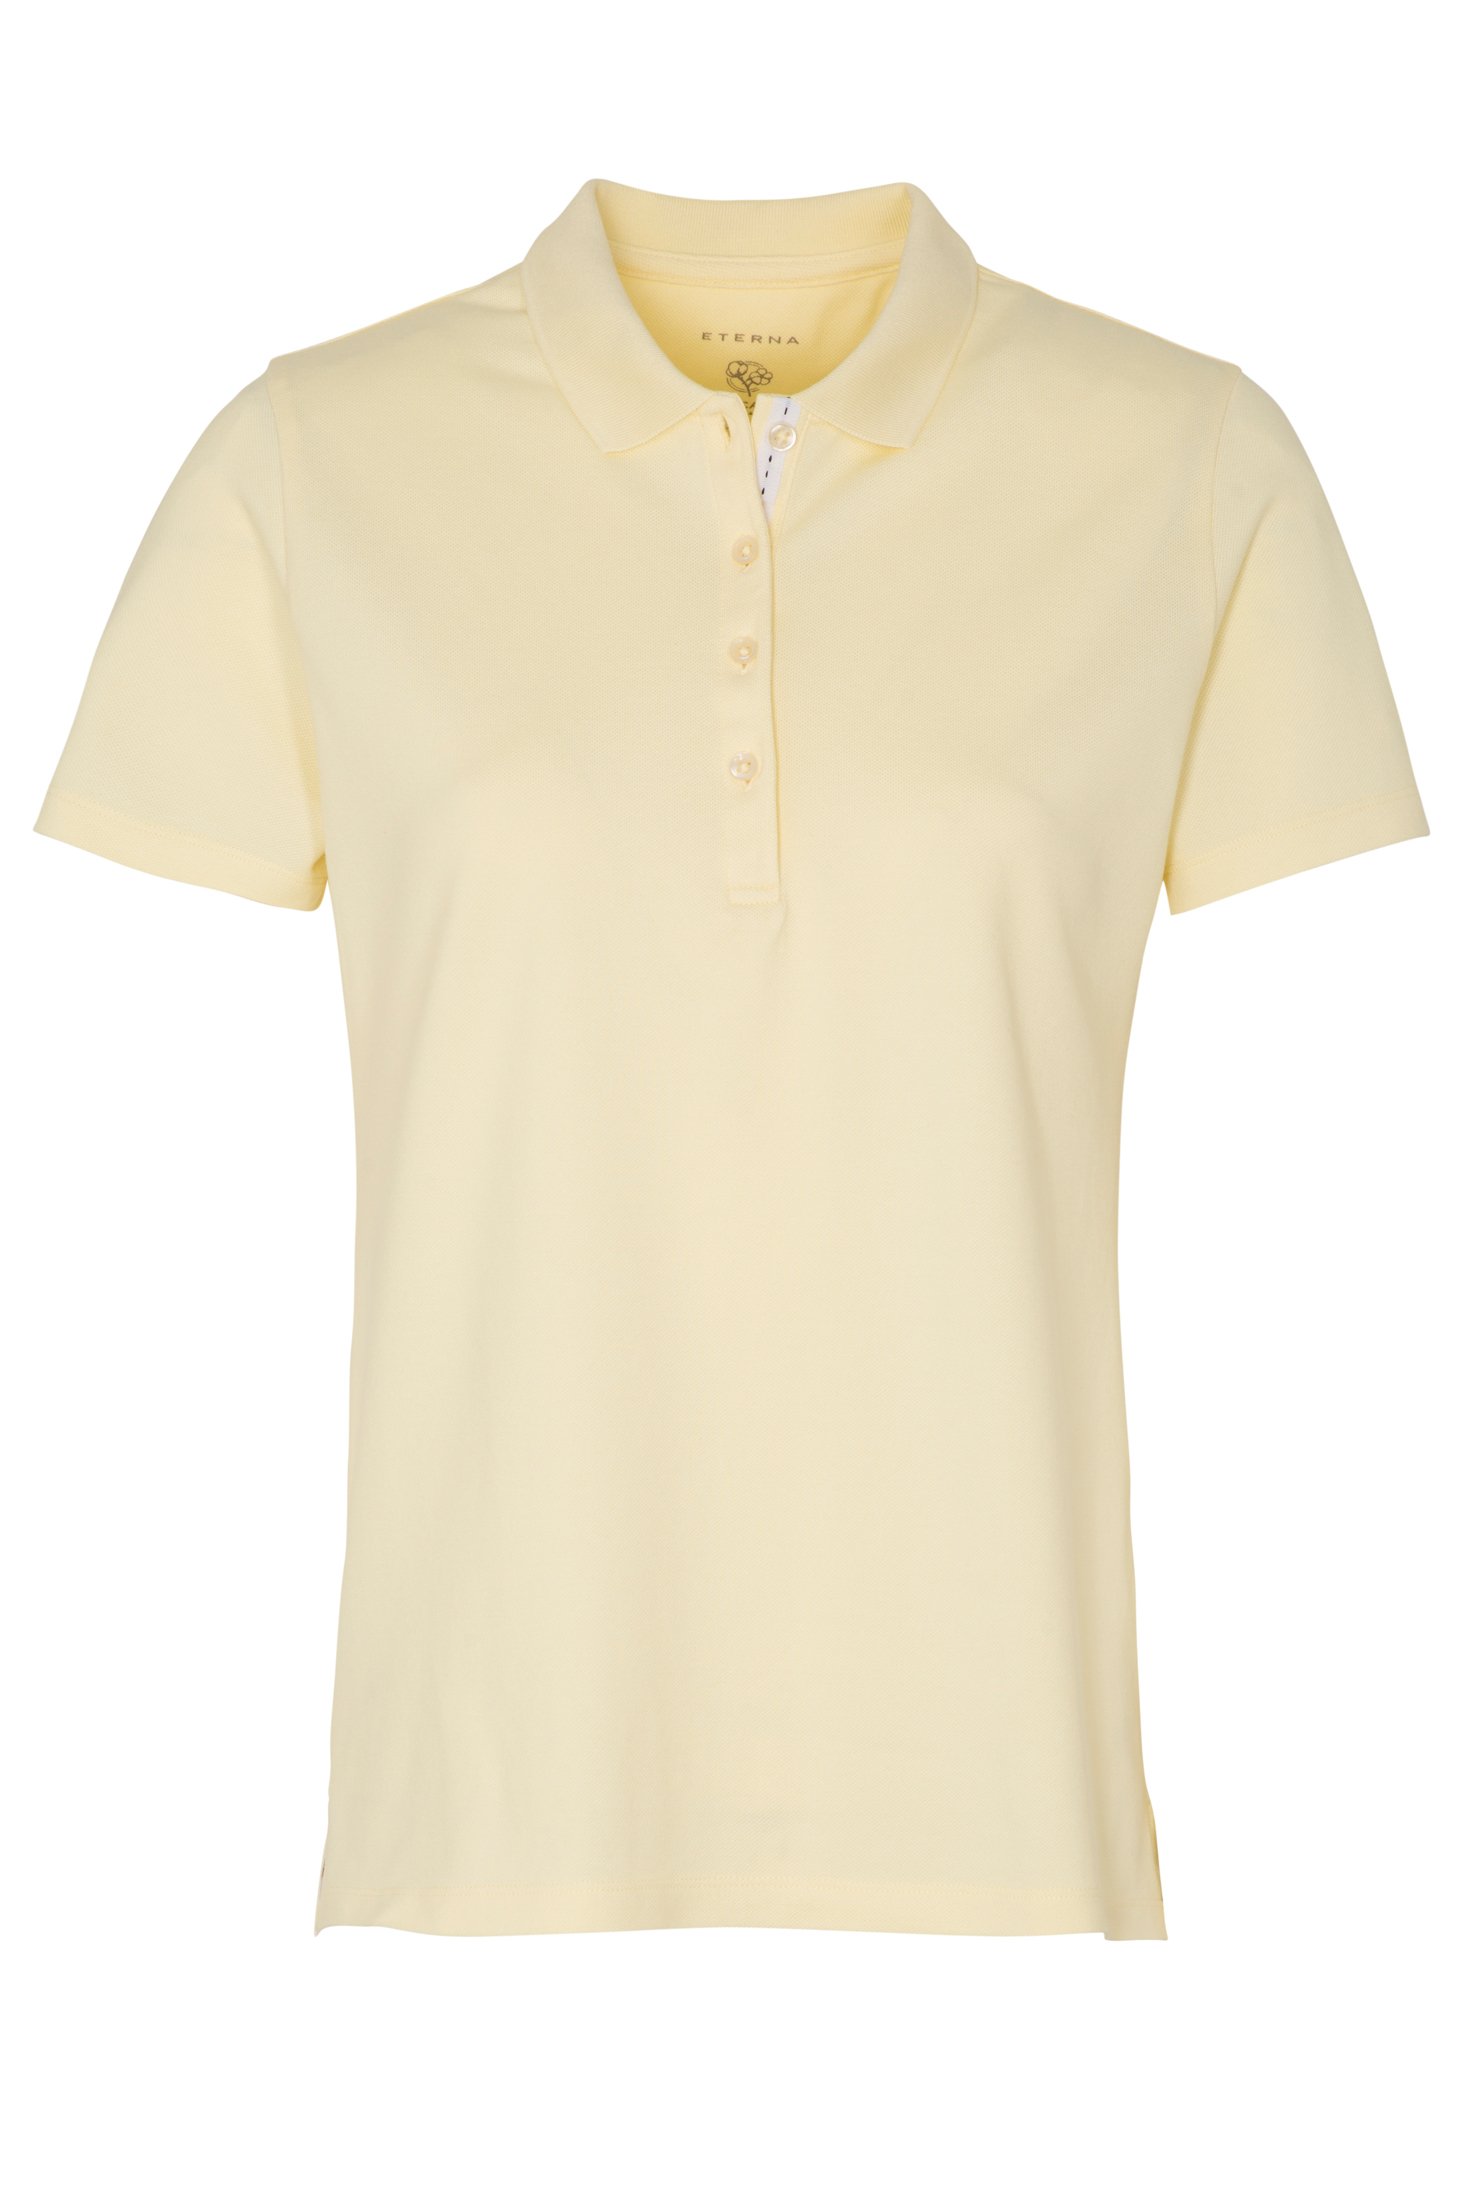 CLASSIC | gelb | Bekleidung FIT ETERNA Poloshirt Eterna Damen | 5535-72-H530 pique Poloshirts | Jeans-Manufaktur